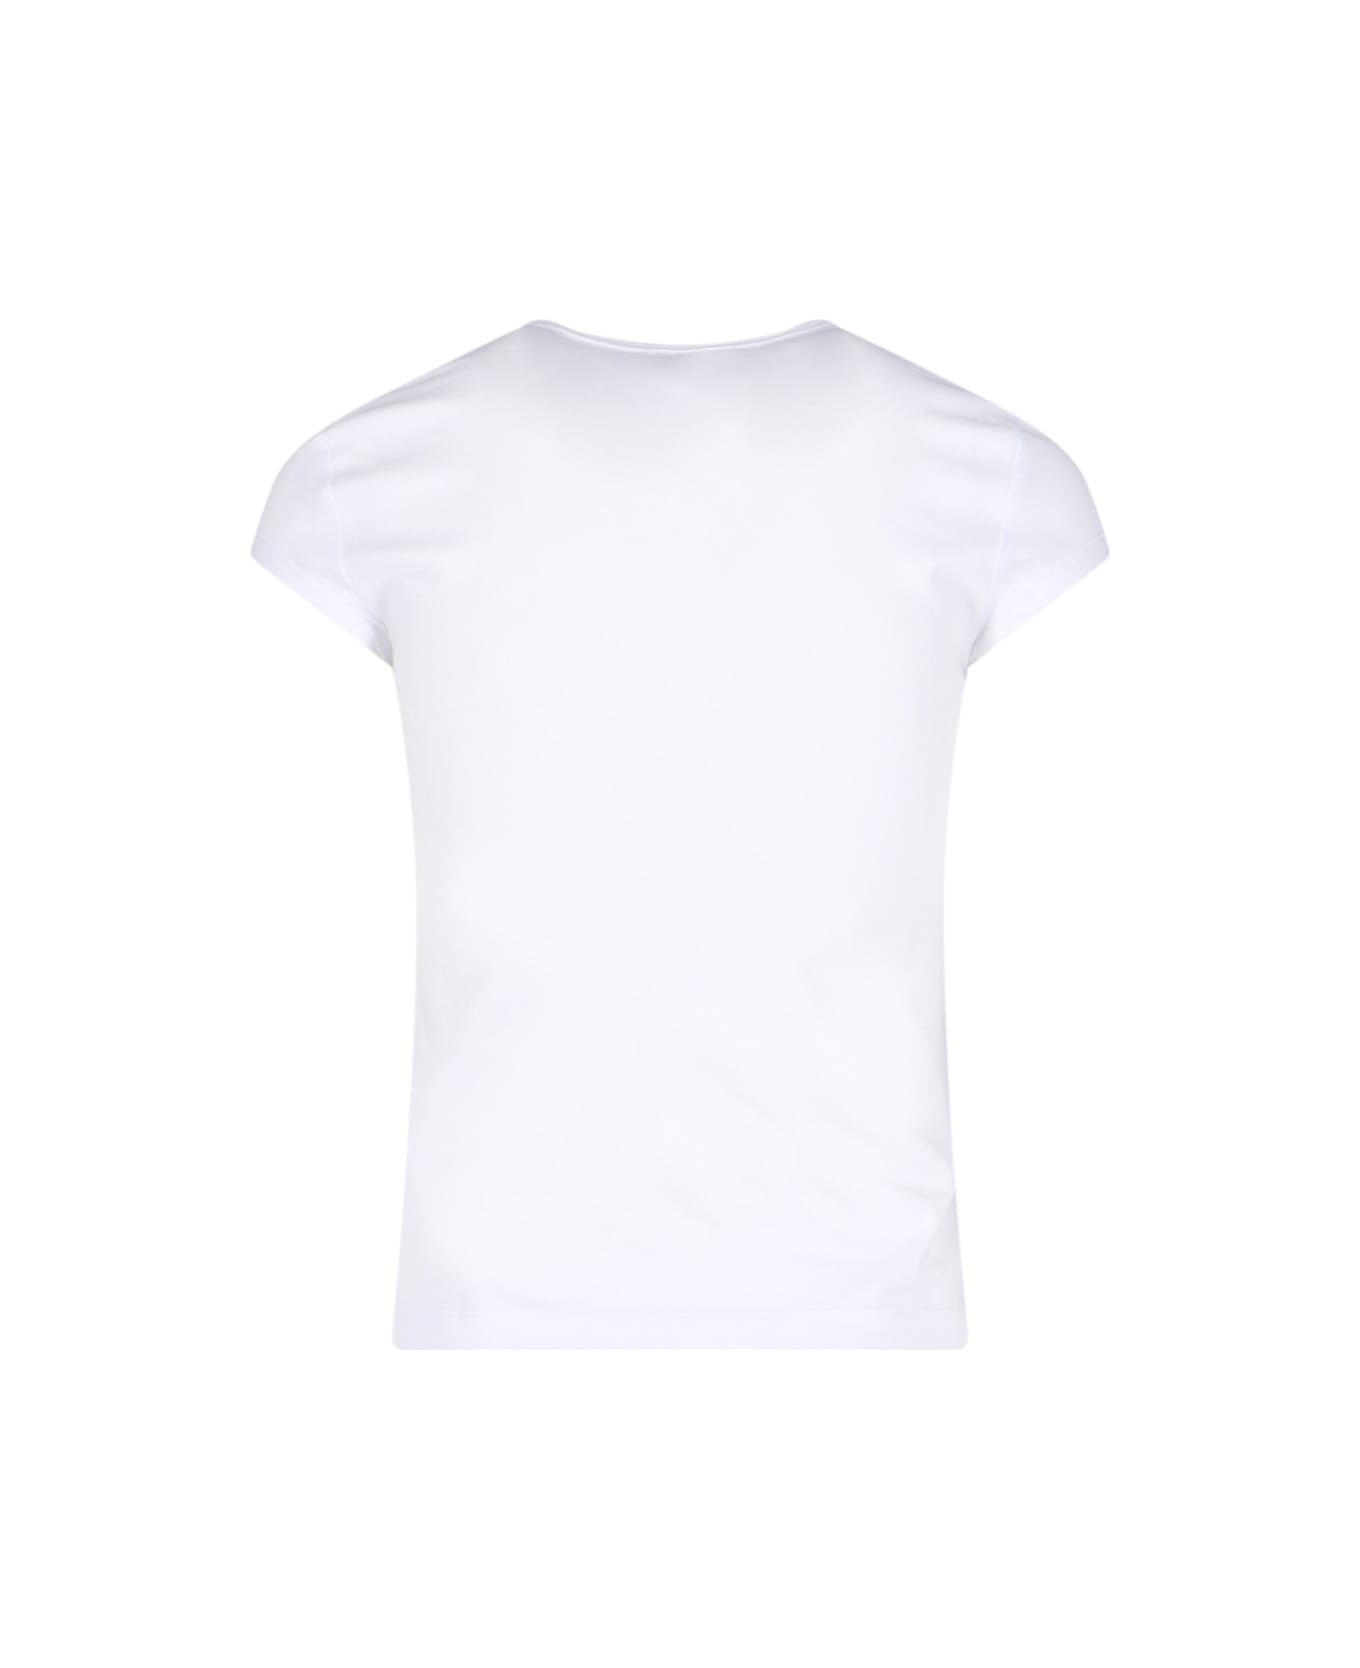 Diesel 't-angie' T-shirt - White Tシャツ